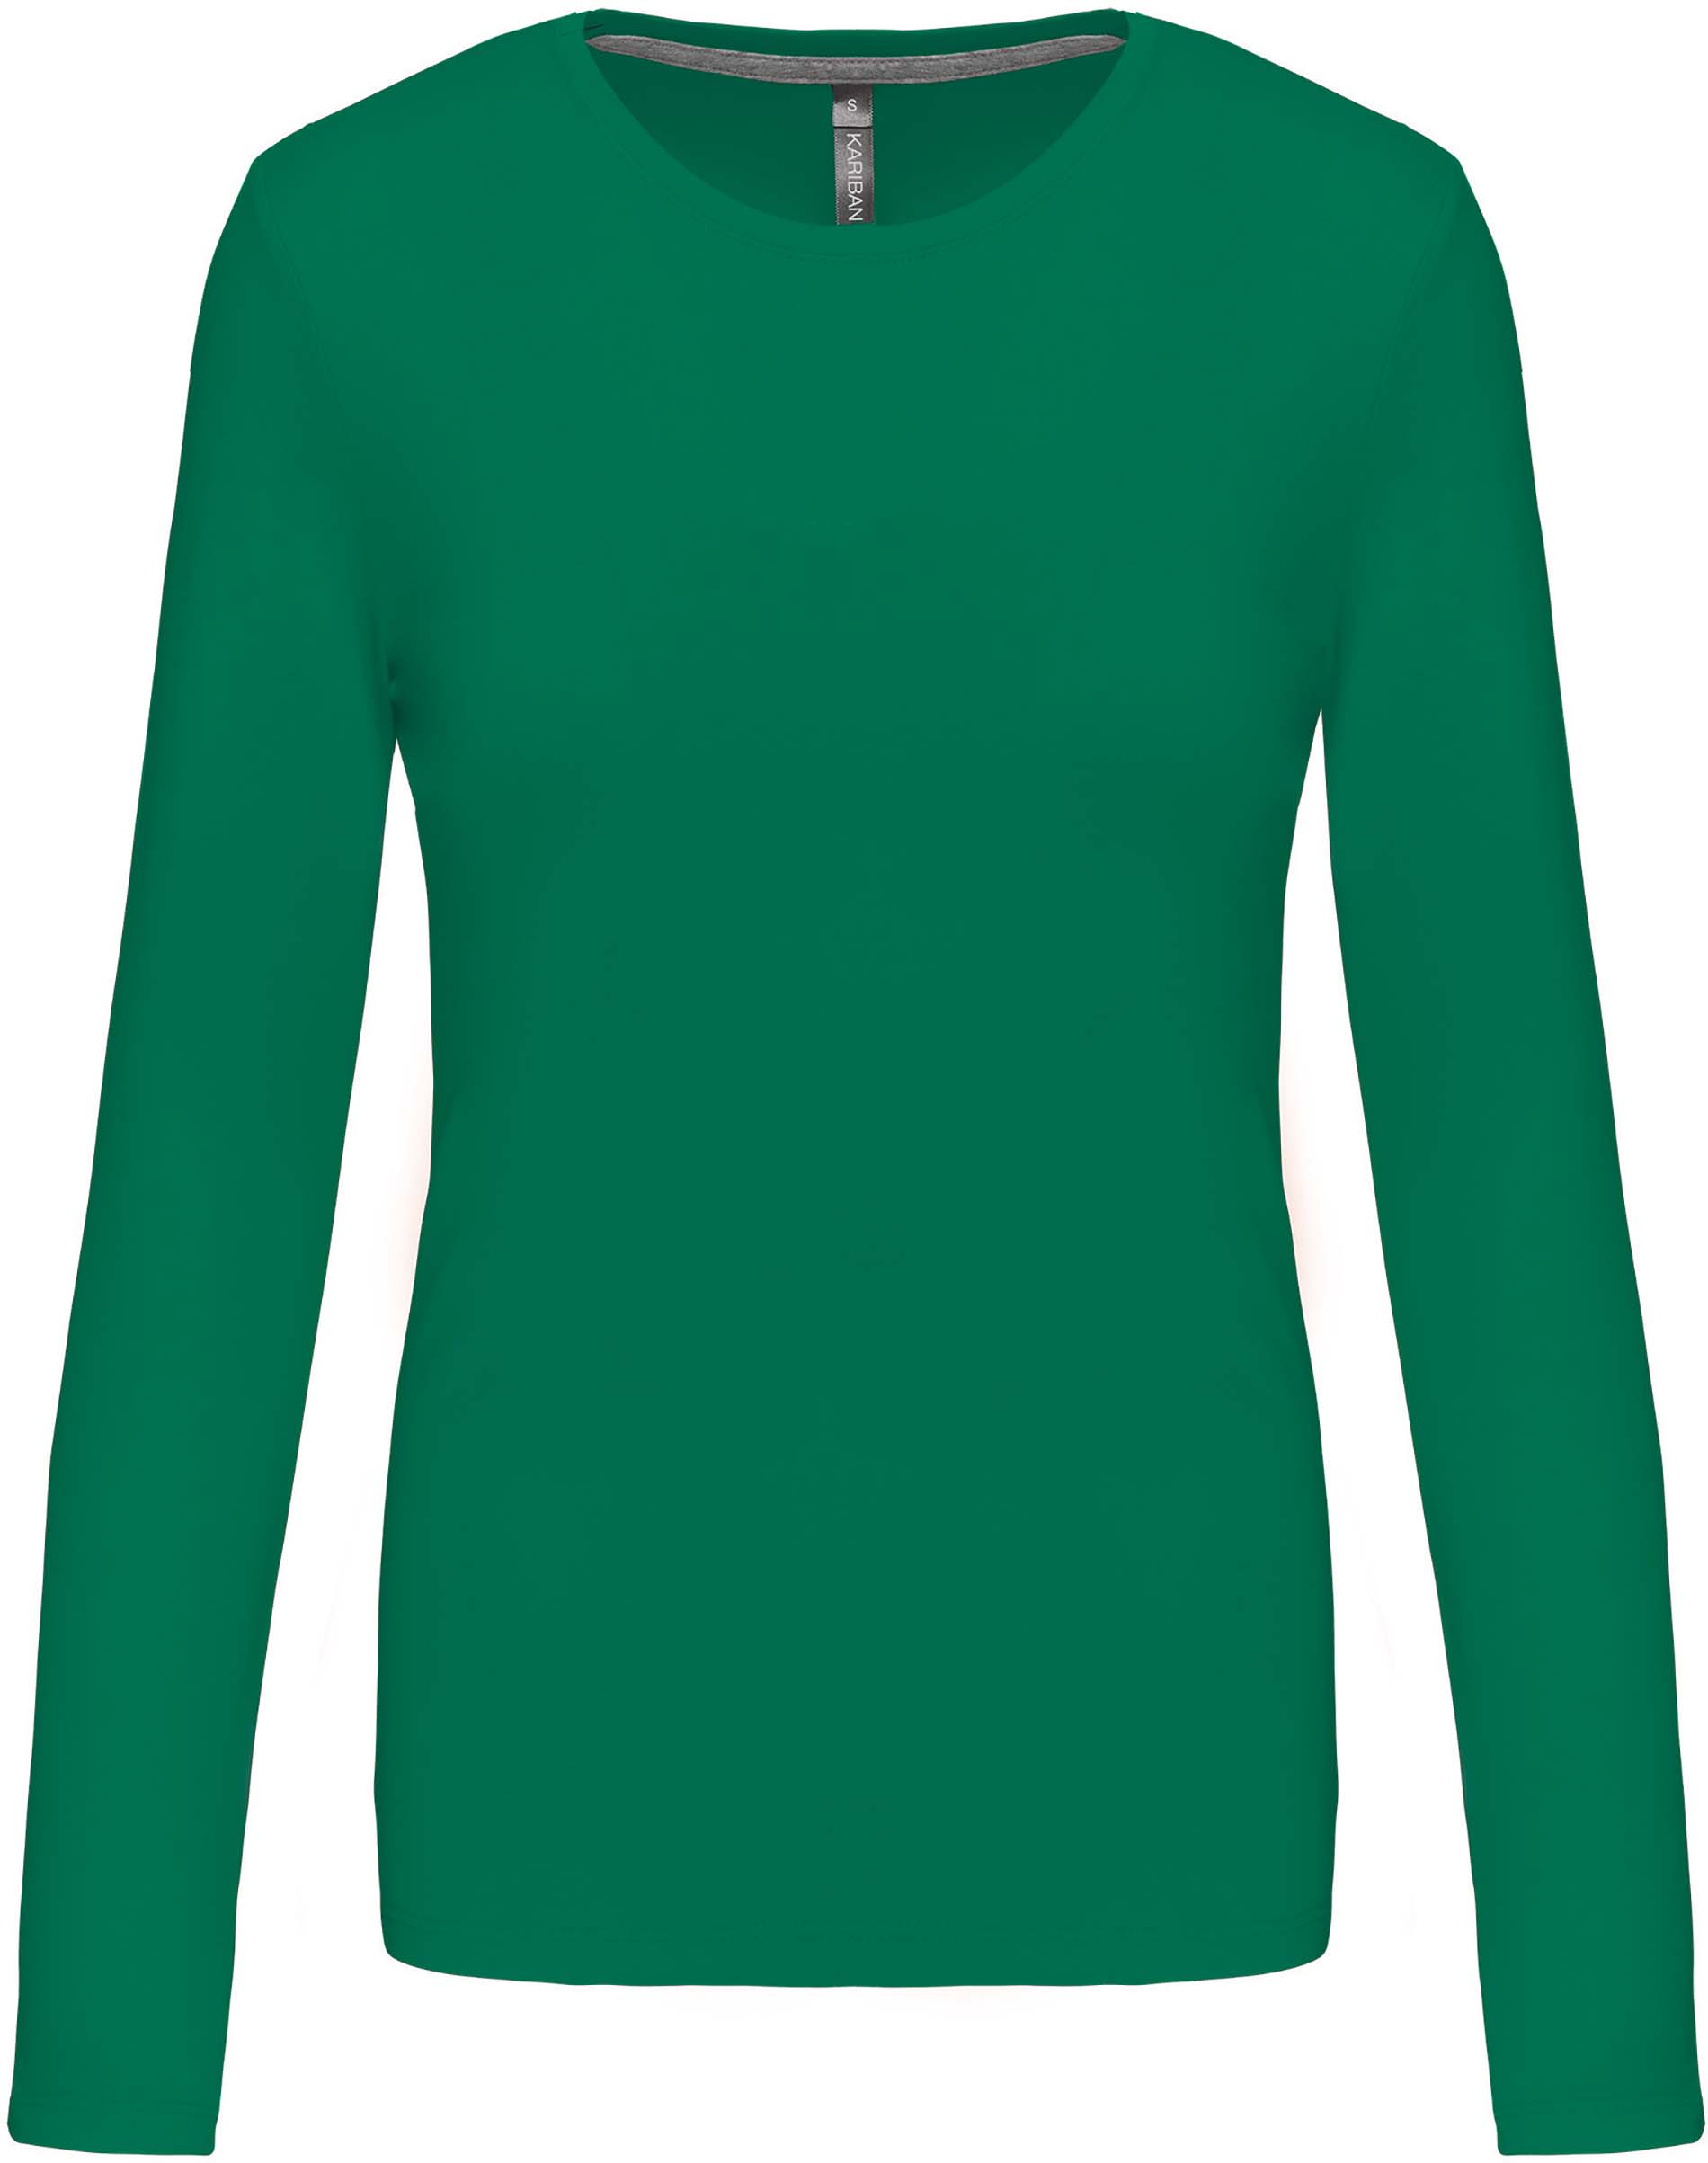 Dámské tričko dl.rukáv Velikost: 3XL, Barva: kelly green, Rozměr: 70/57